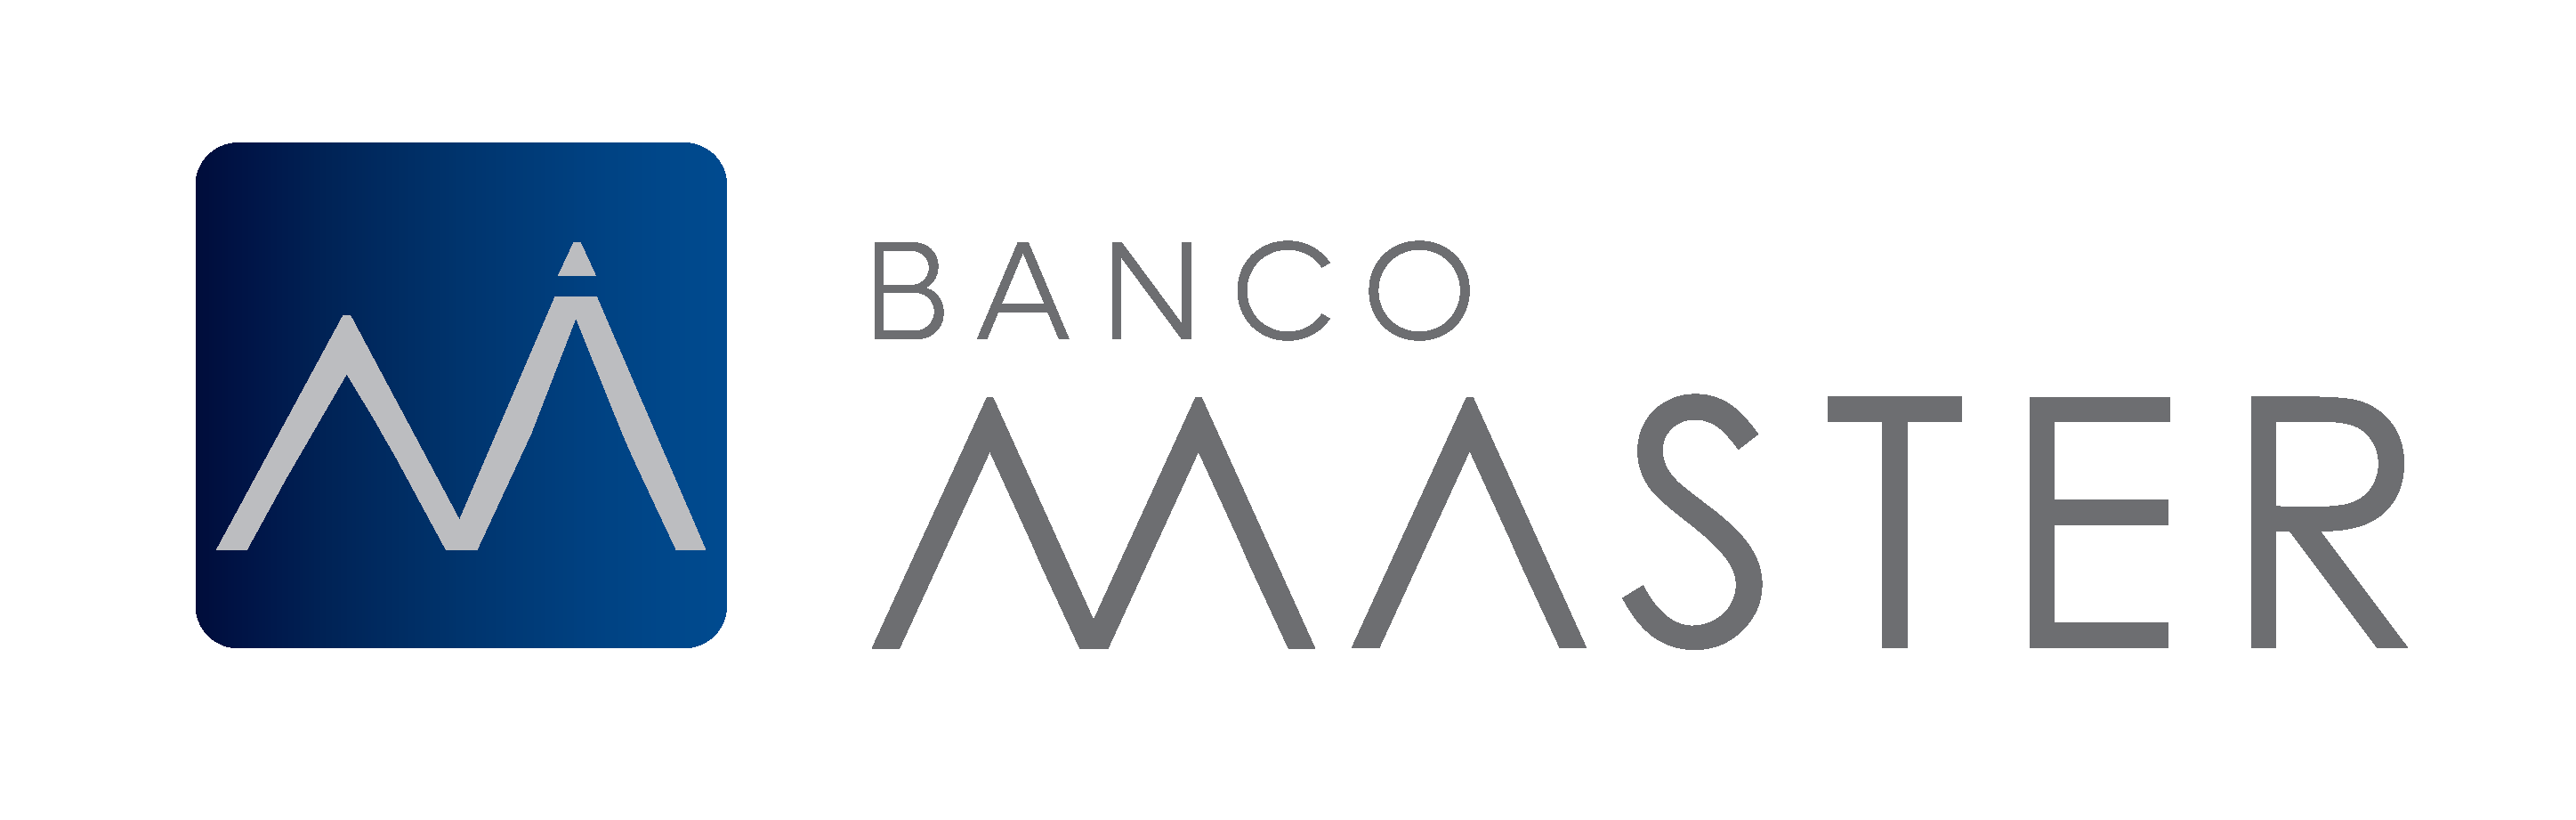 Banco Master BrazilFoundation Gala Minas Filantropia